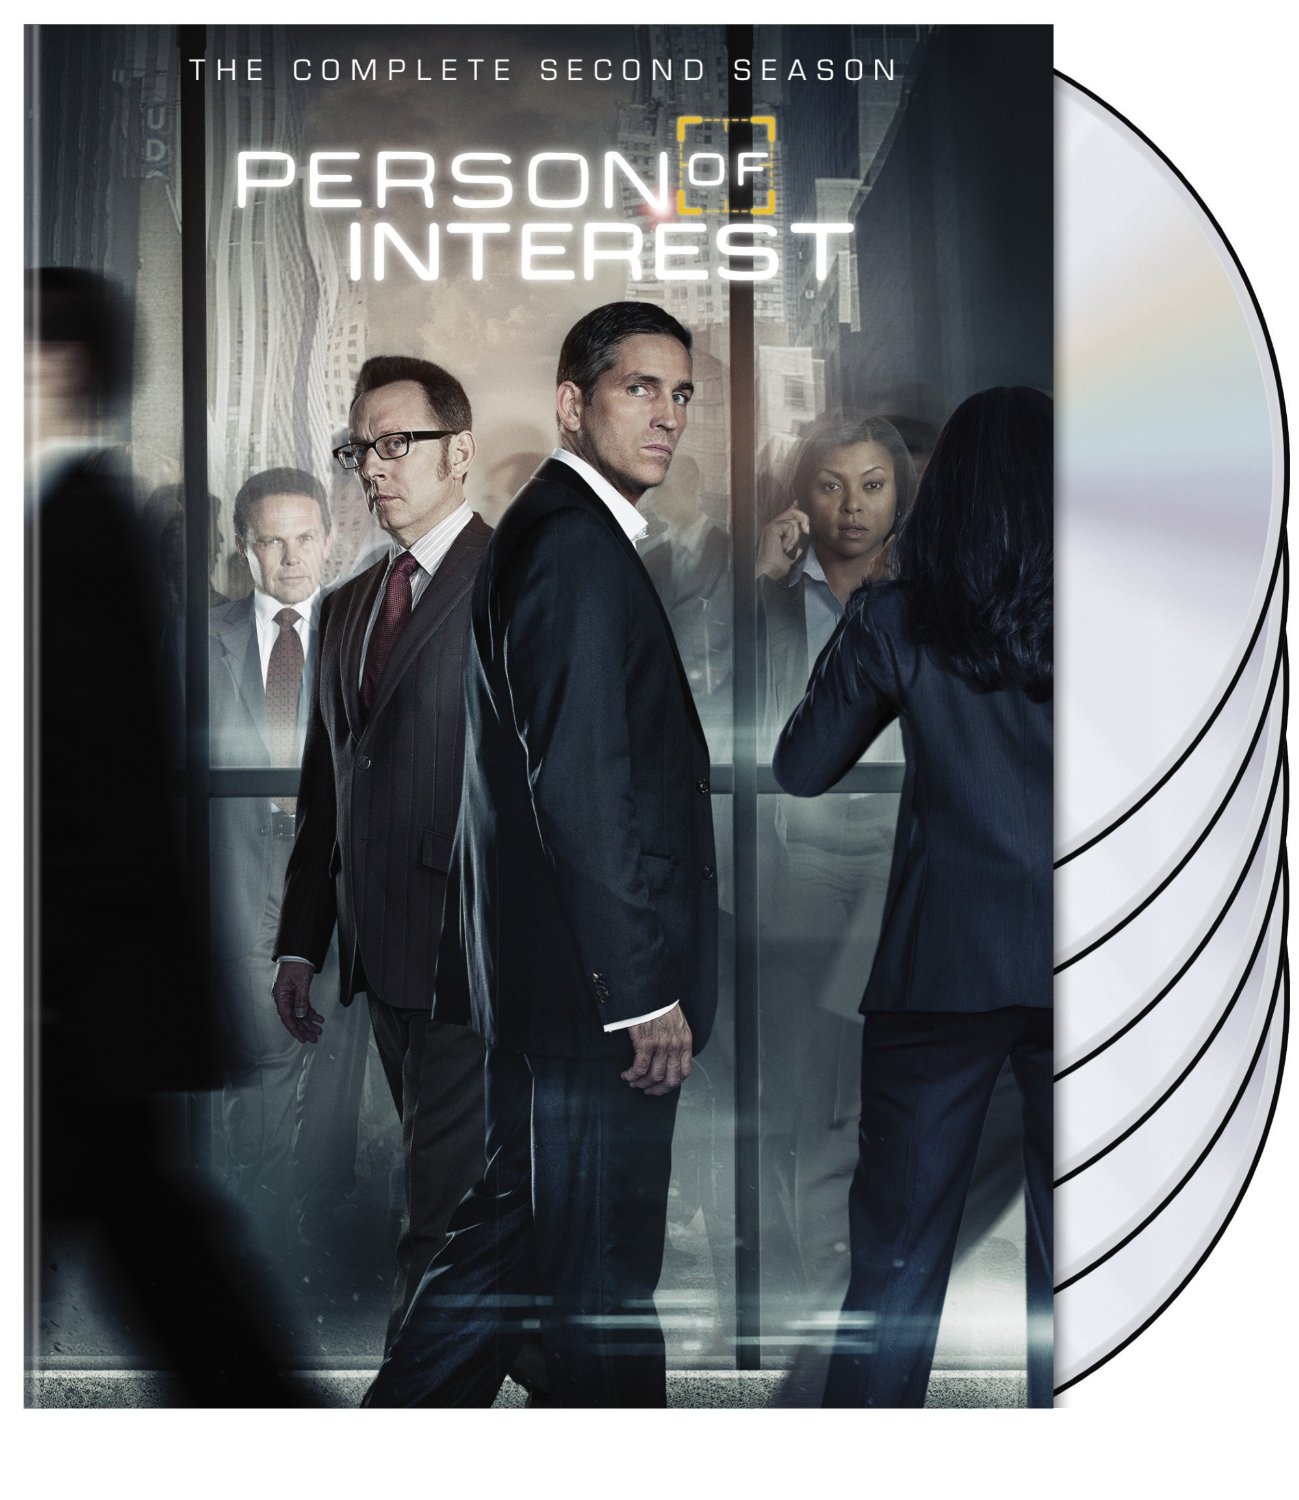  Person of Interest: Season 2 (8DISCS)